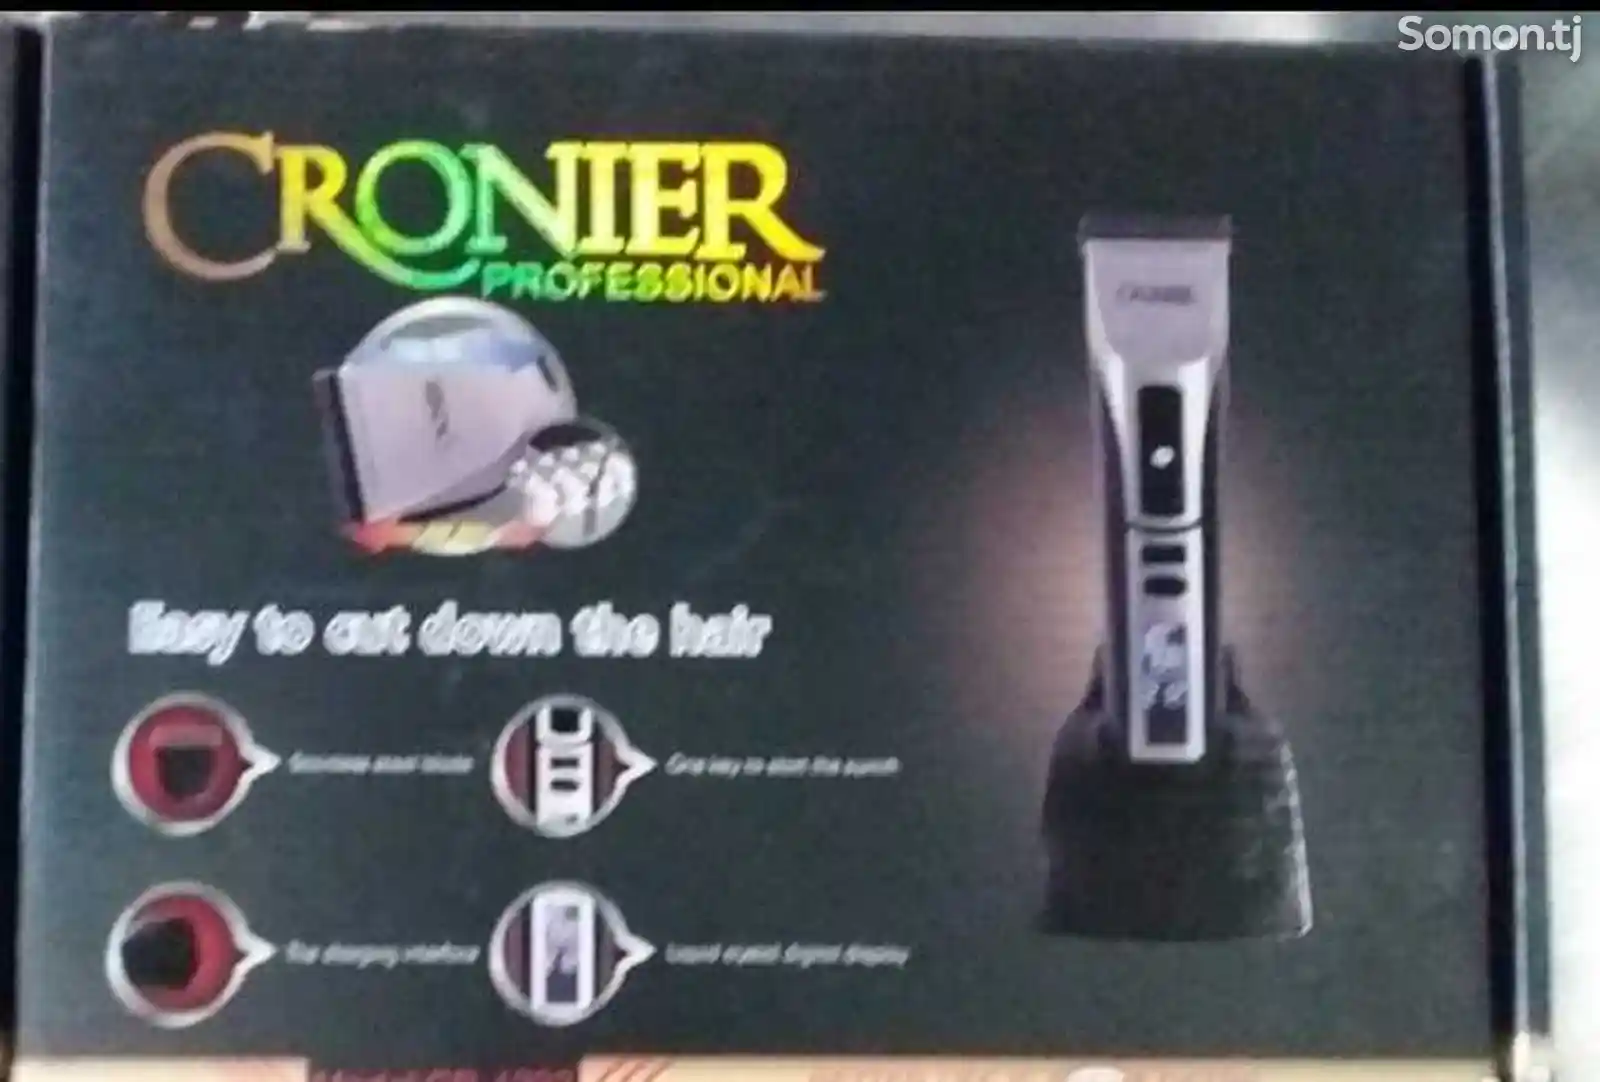 Триммер Croner-1